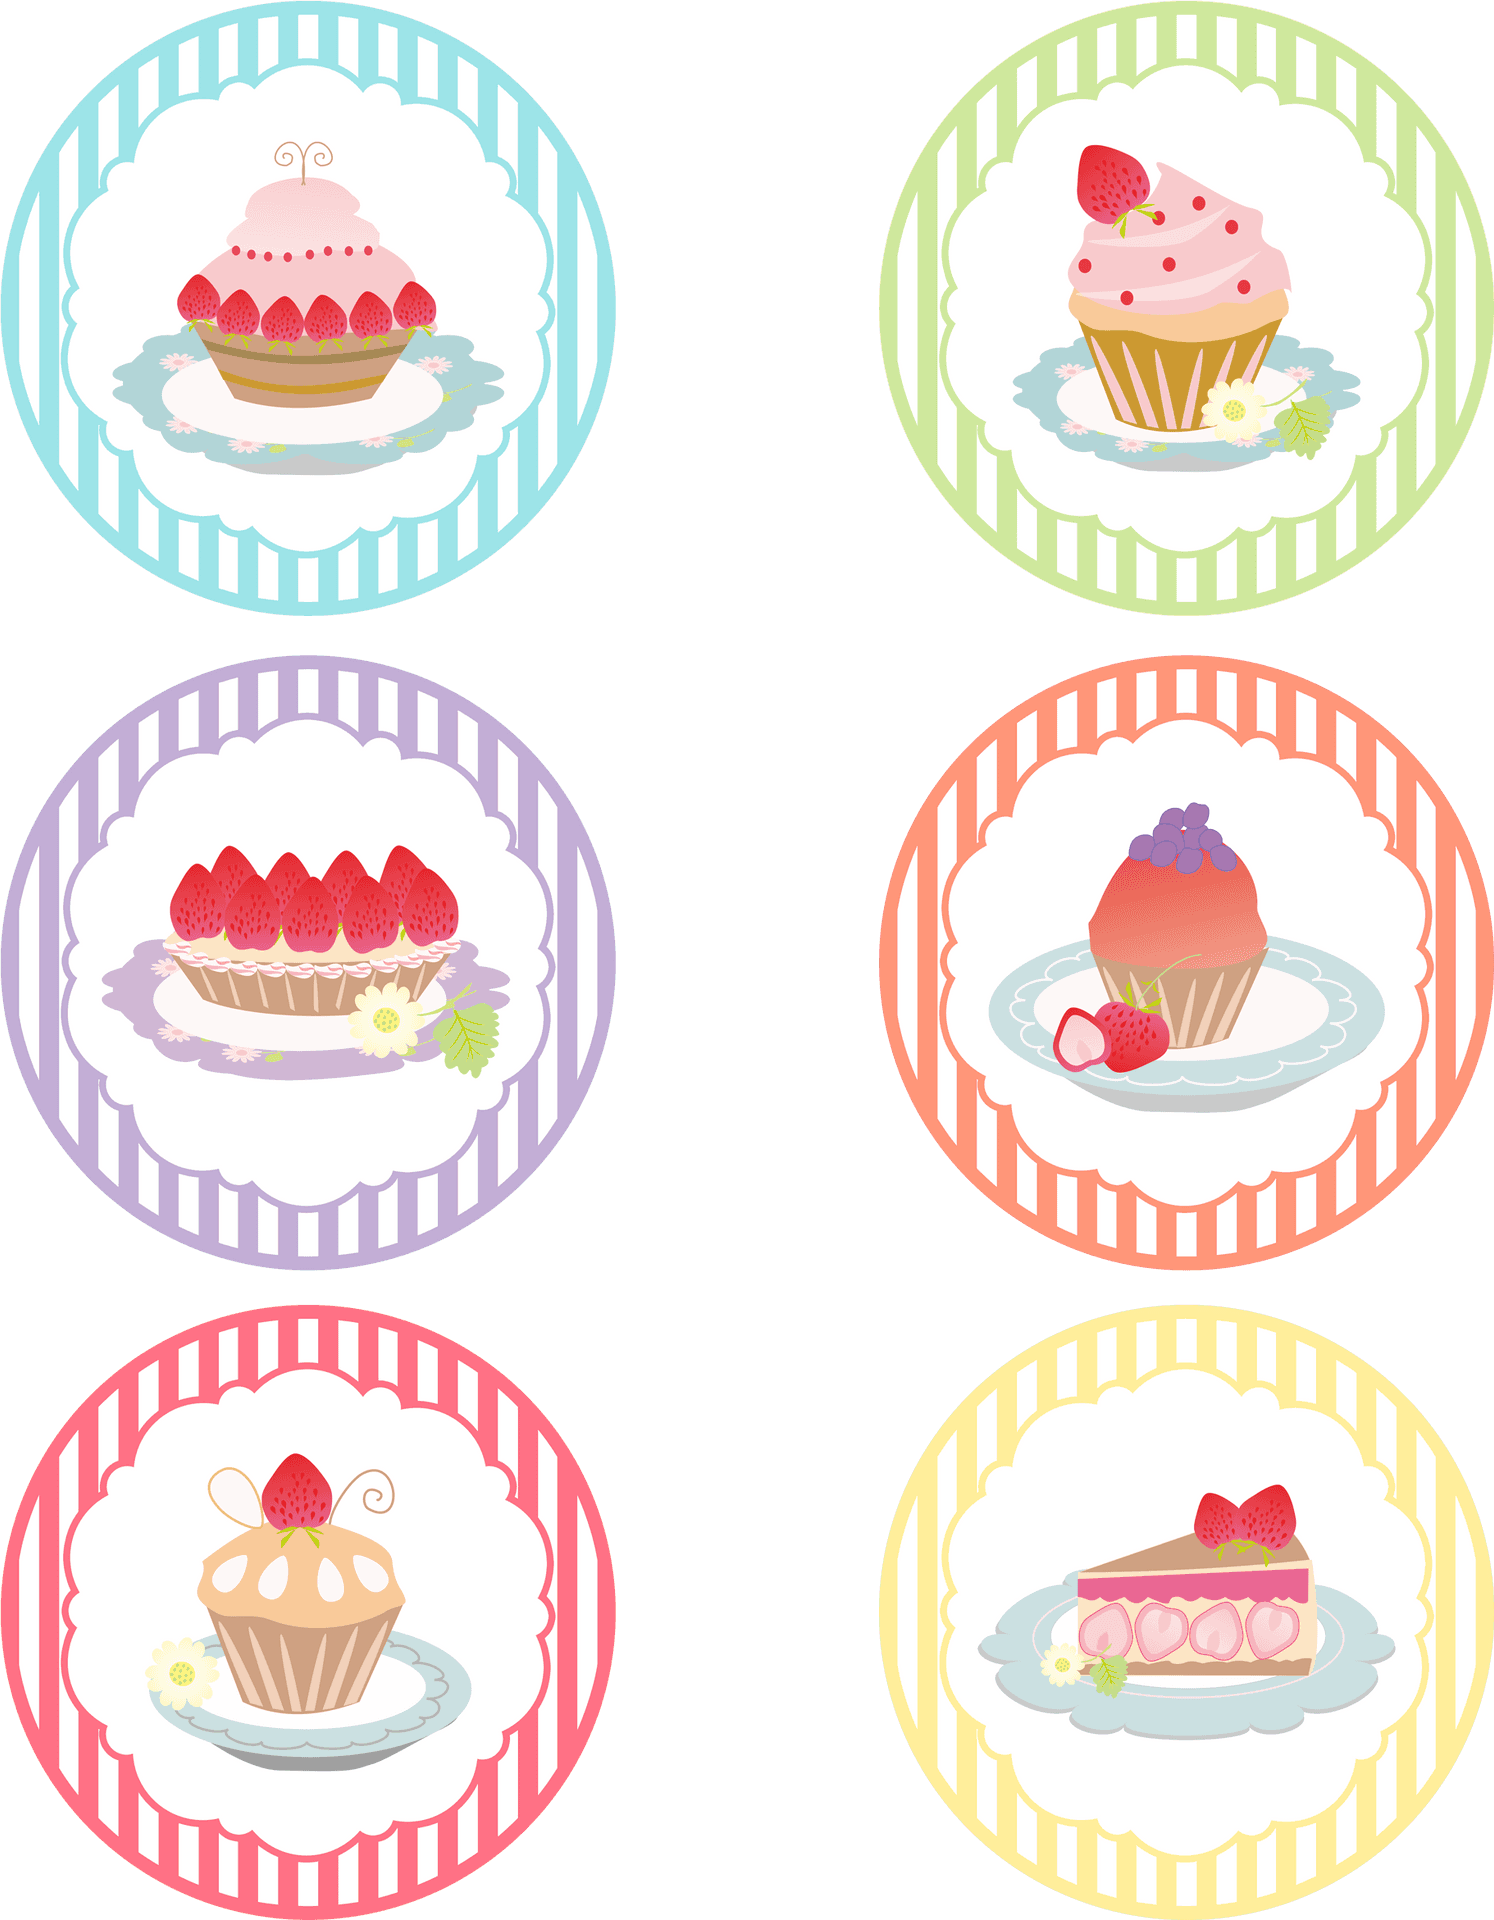 Assorted Cake Logos Set PNG image